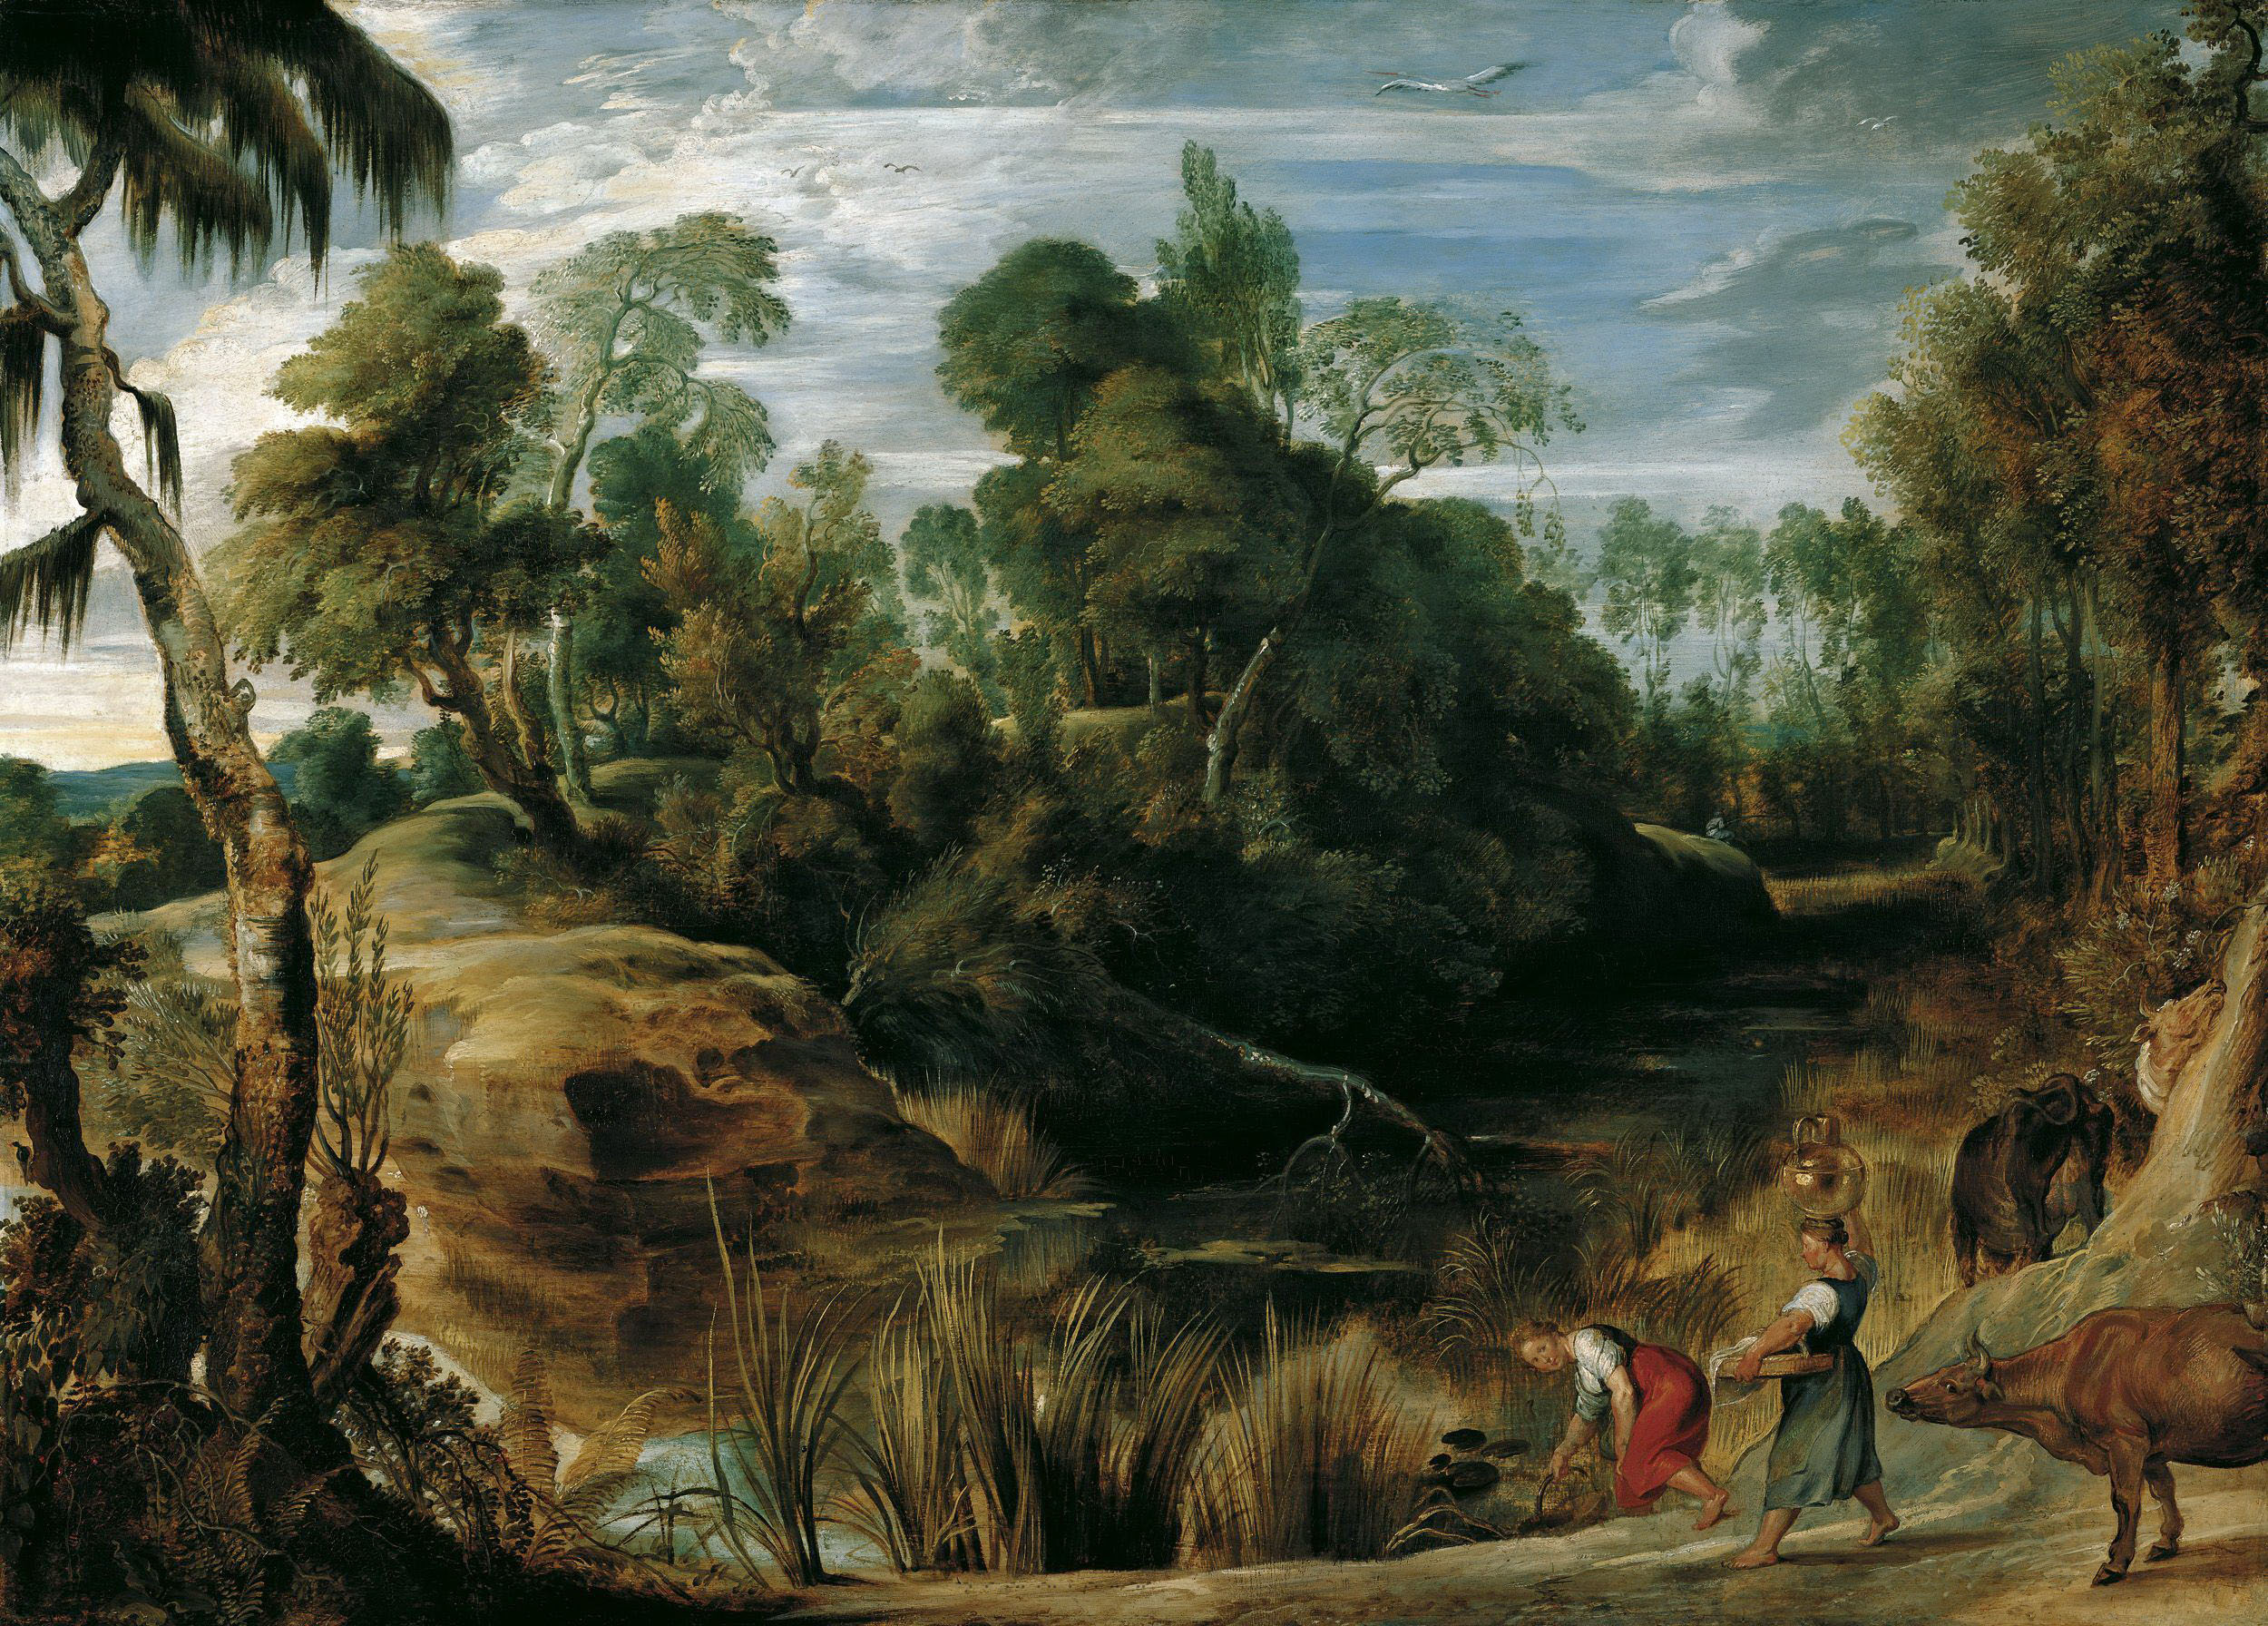 Питер Пауль Рубенс. "Пейзаж с доярками и коровами". 1616. Музей Лихтенштейн, Вена.